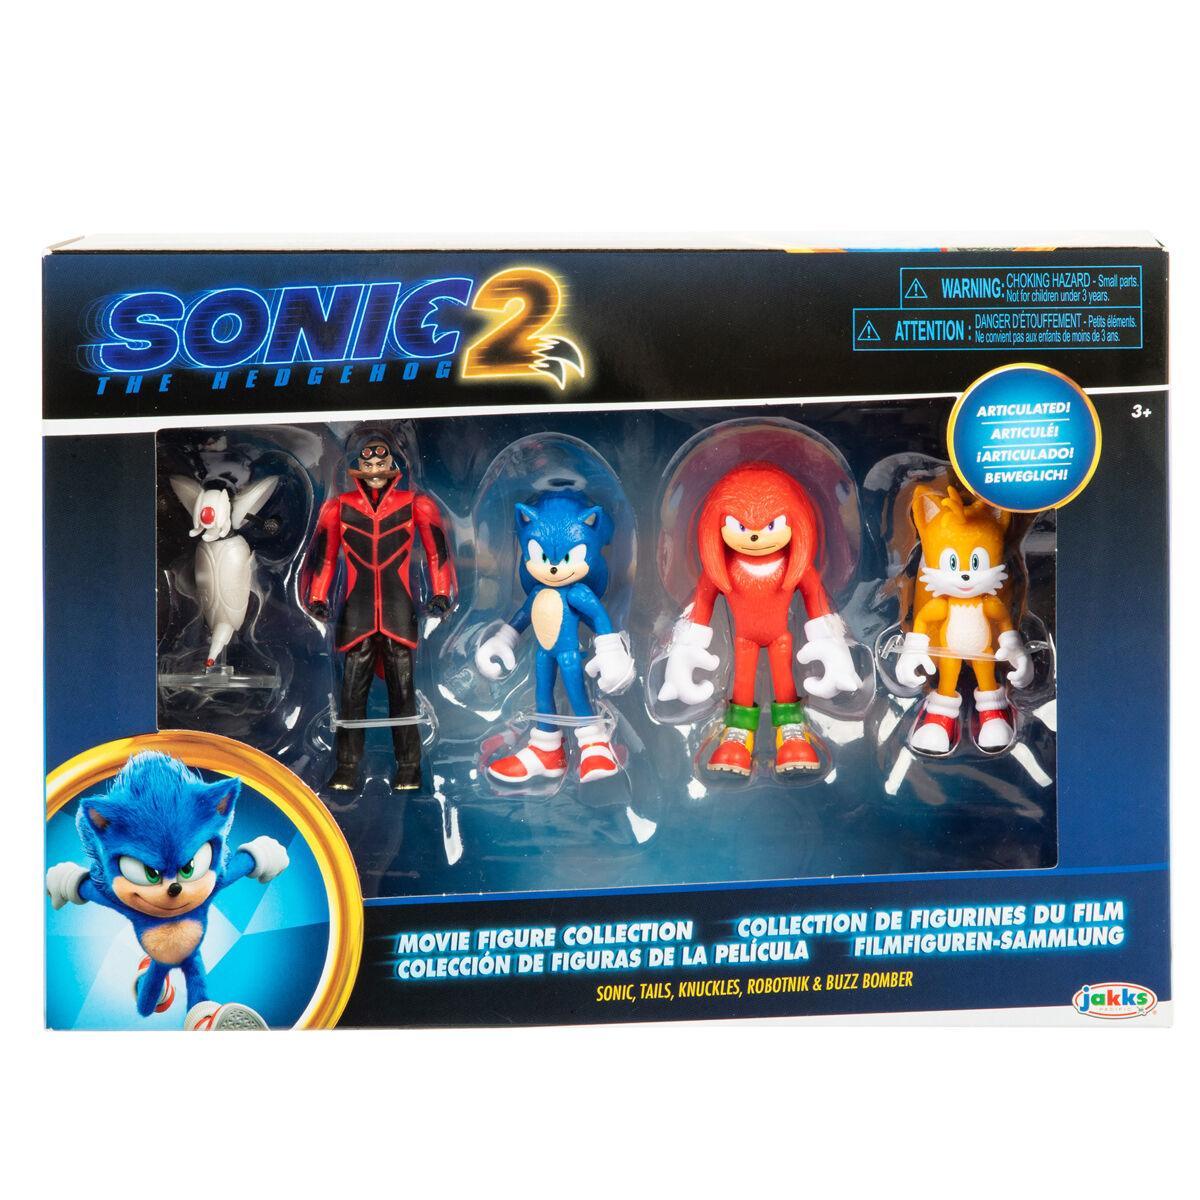 Sonic 2 Pack 2